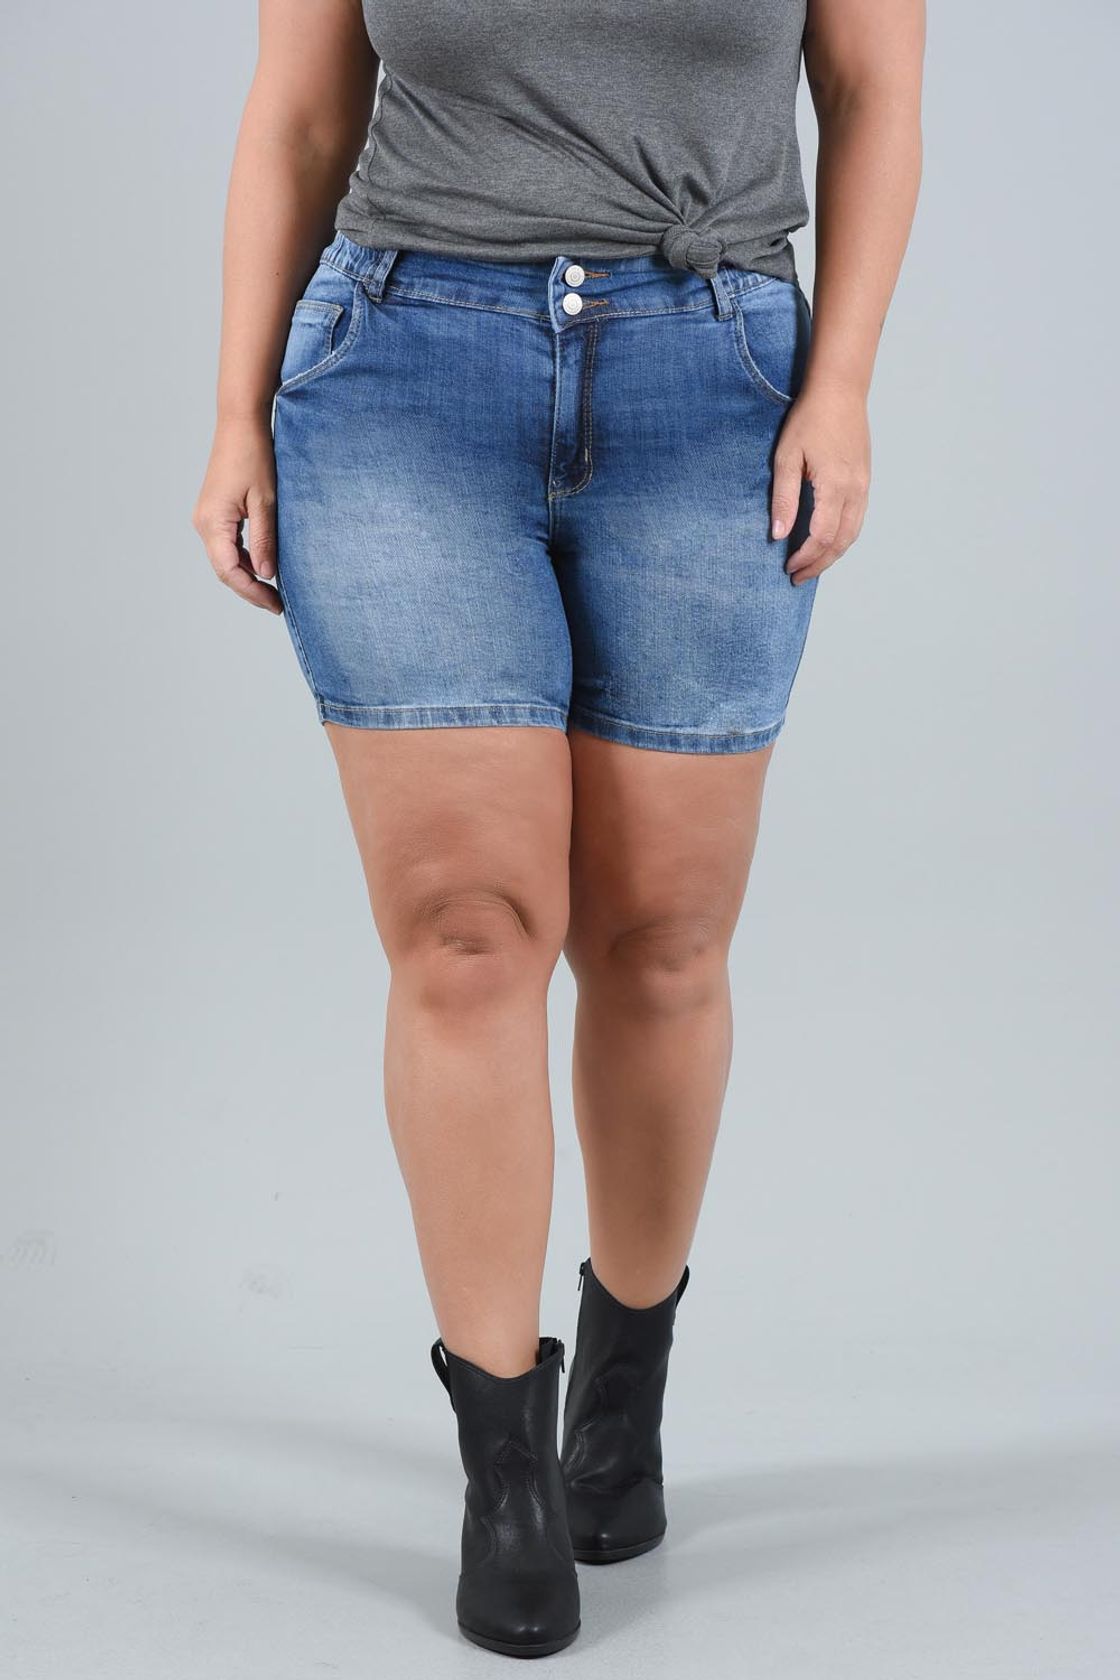 Shorts Plus Size Geruza com Elástico no Cós Jeans - Program Moda